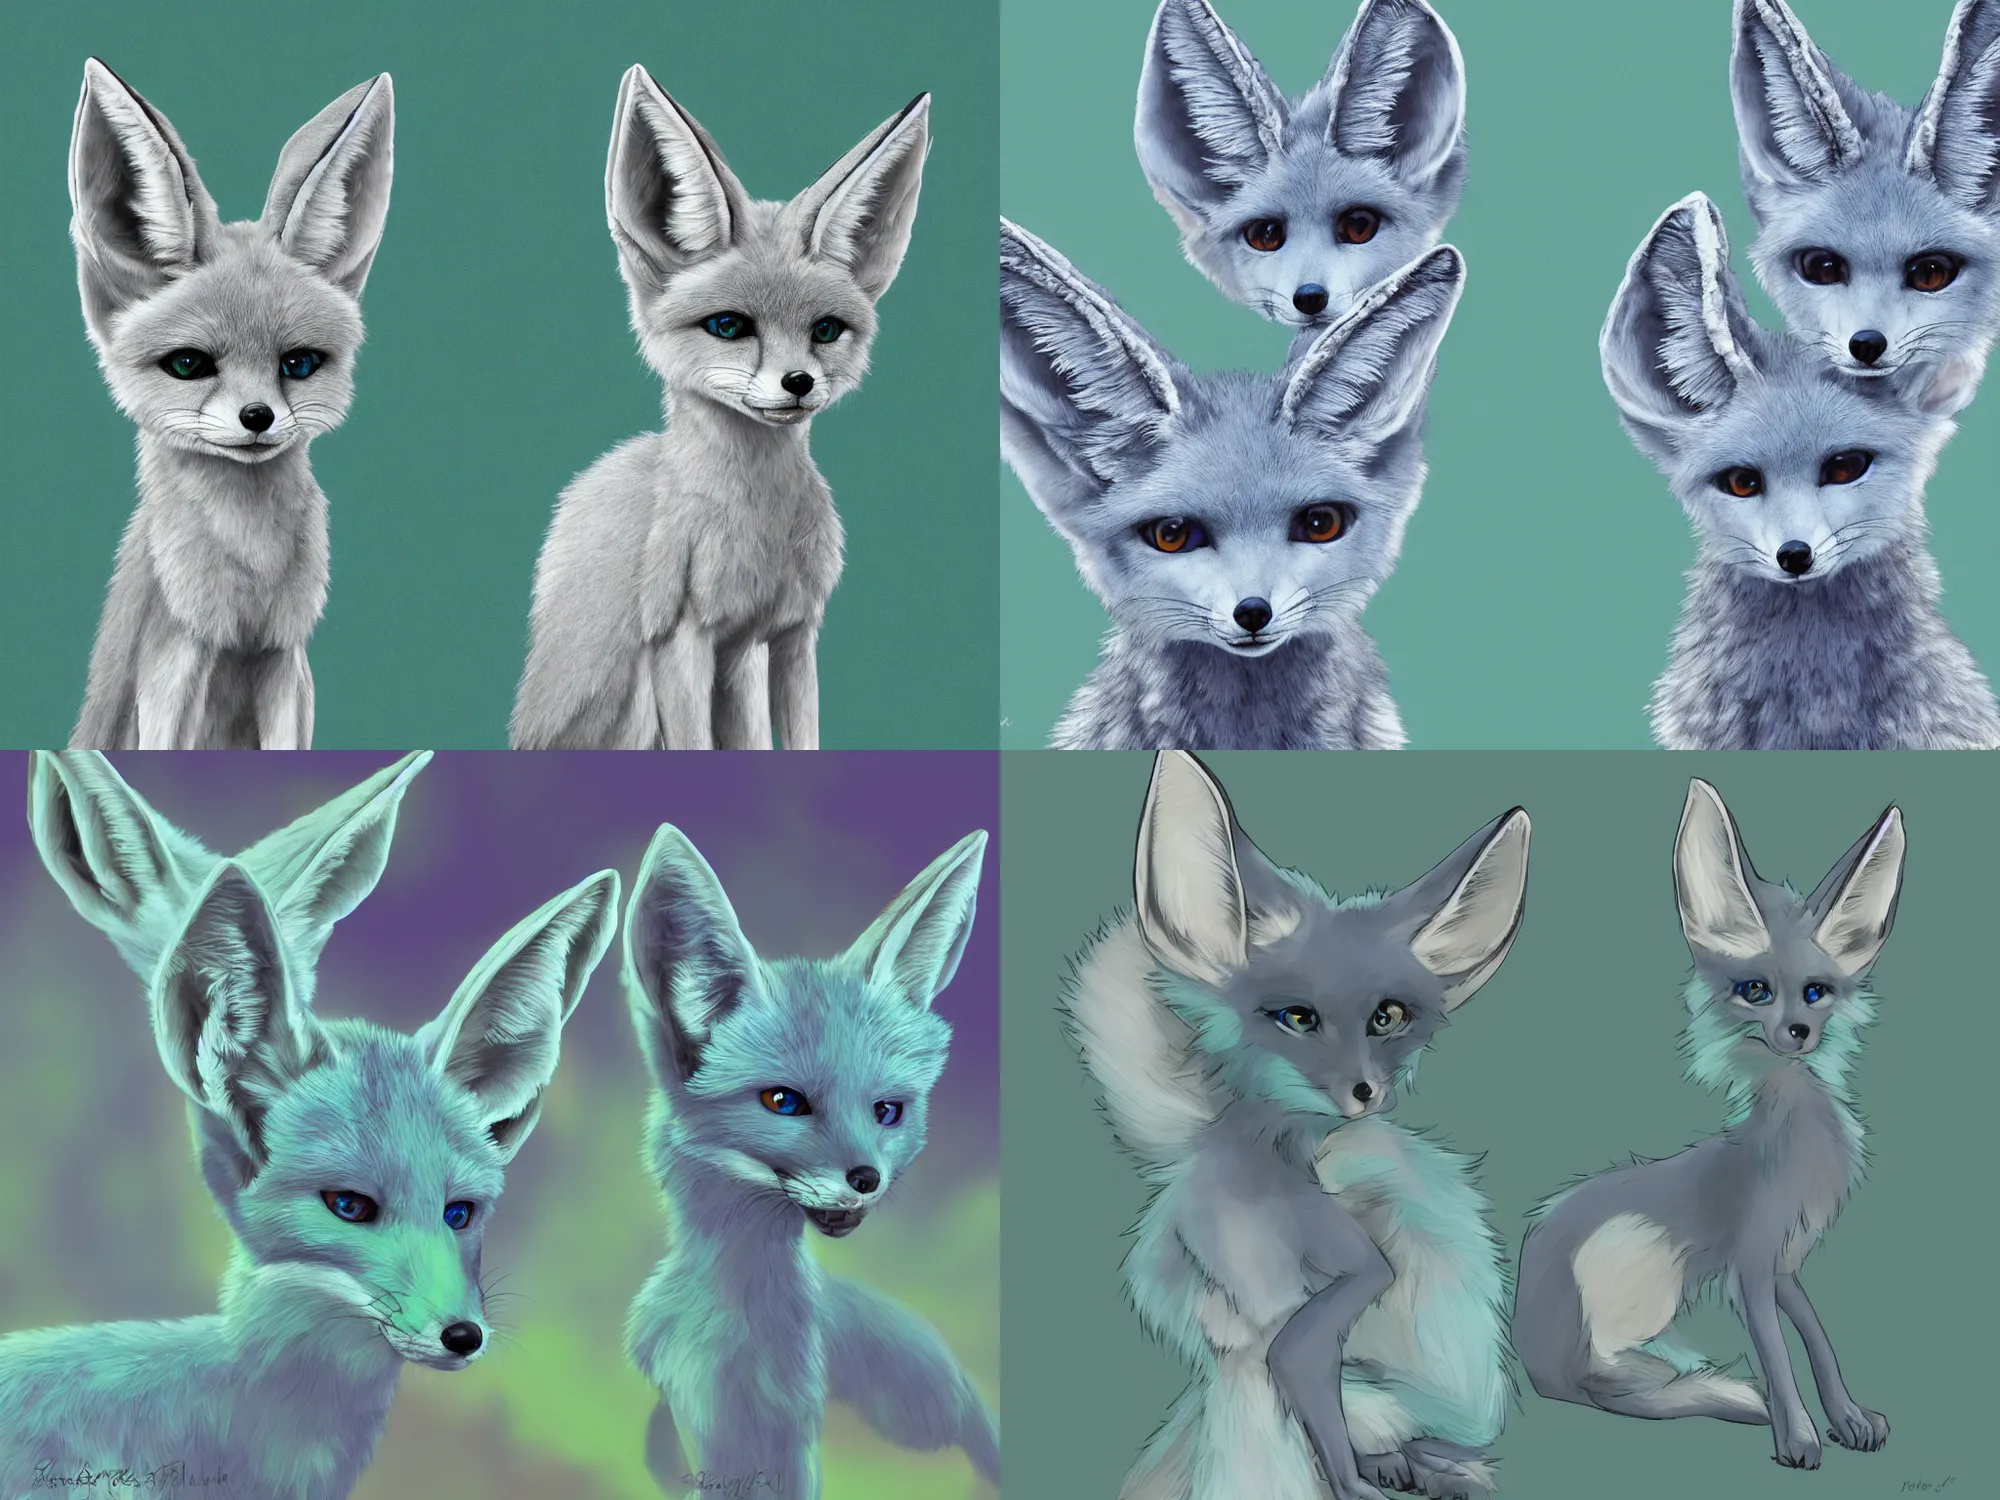 Prompt: Digital furry art of a blue fennec fox with green eyes